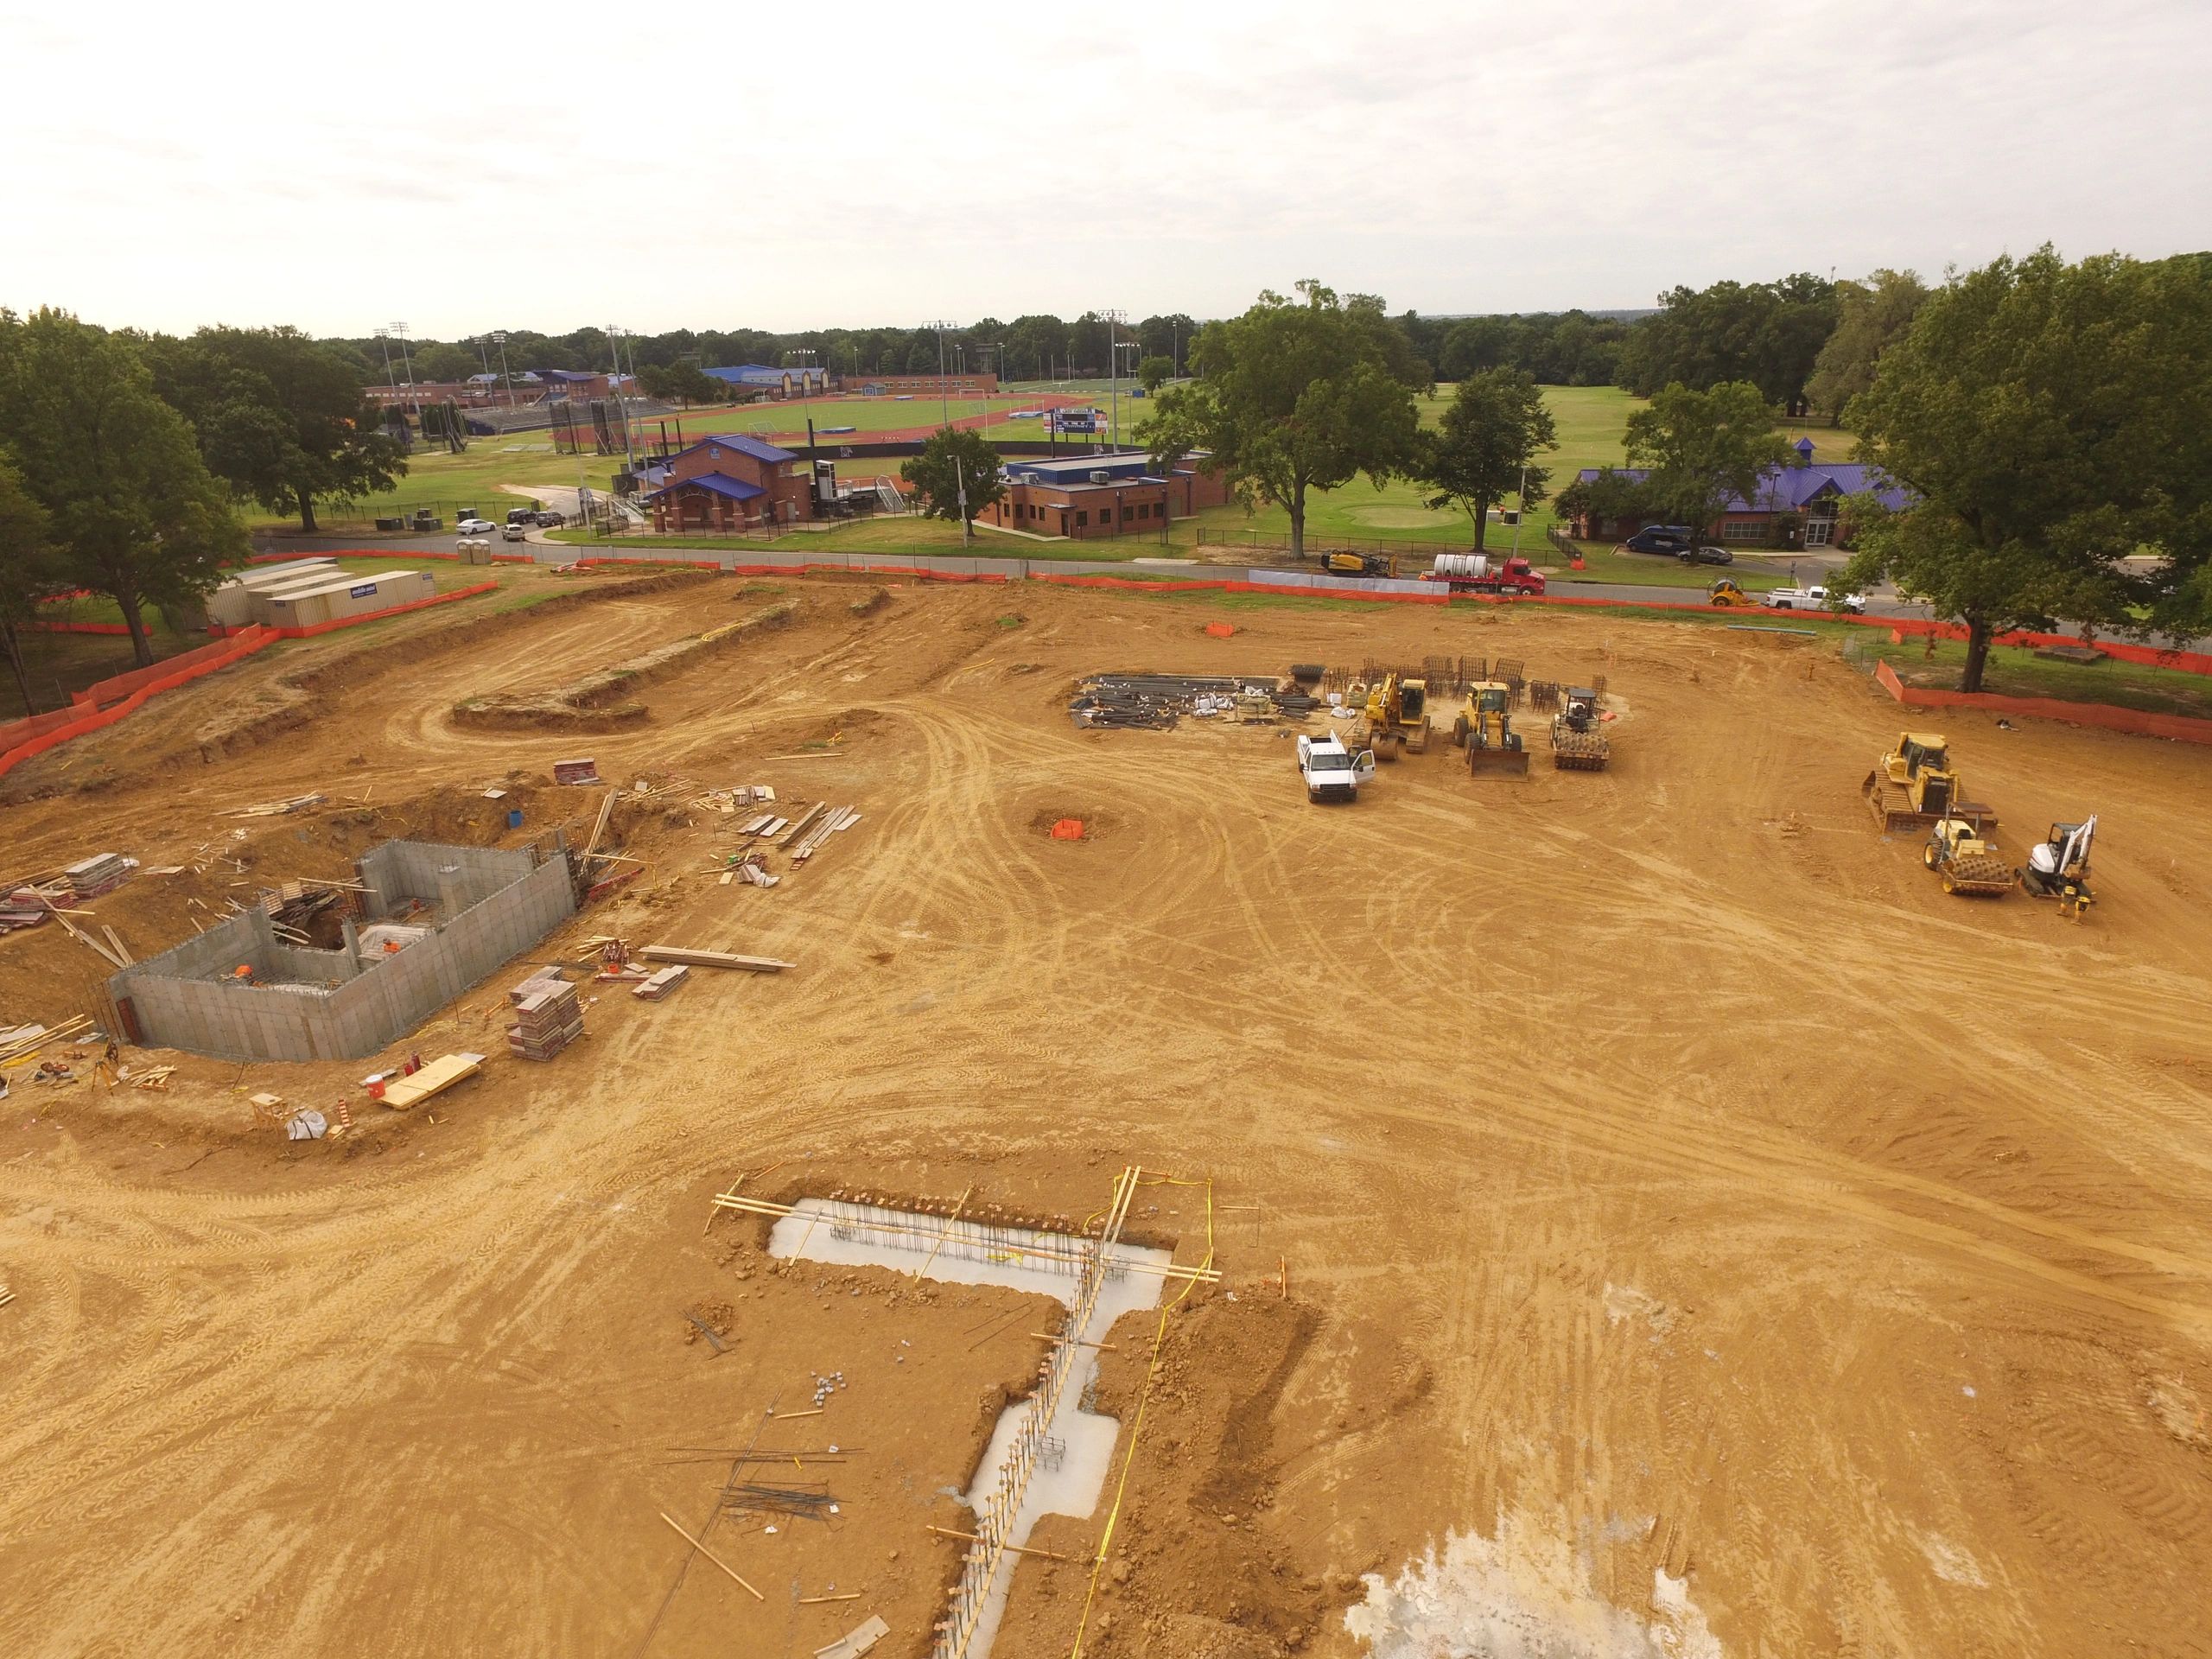 Univ of Memphis Basketball Practice Facility Construction Begins